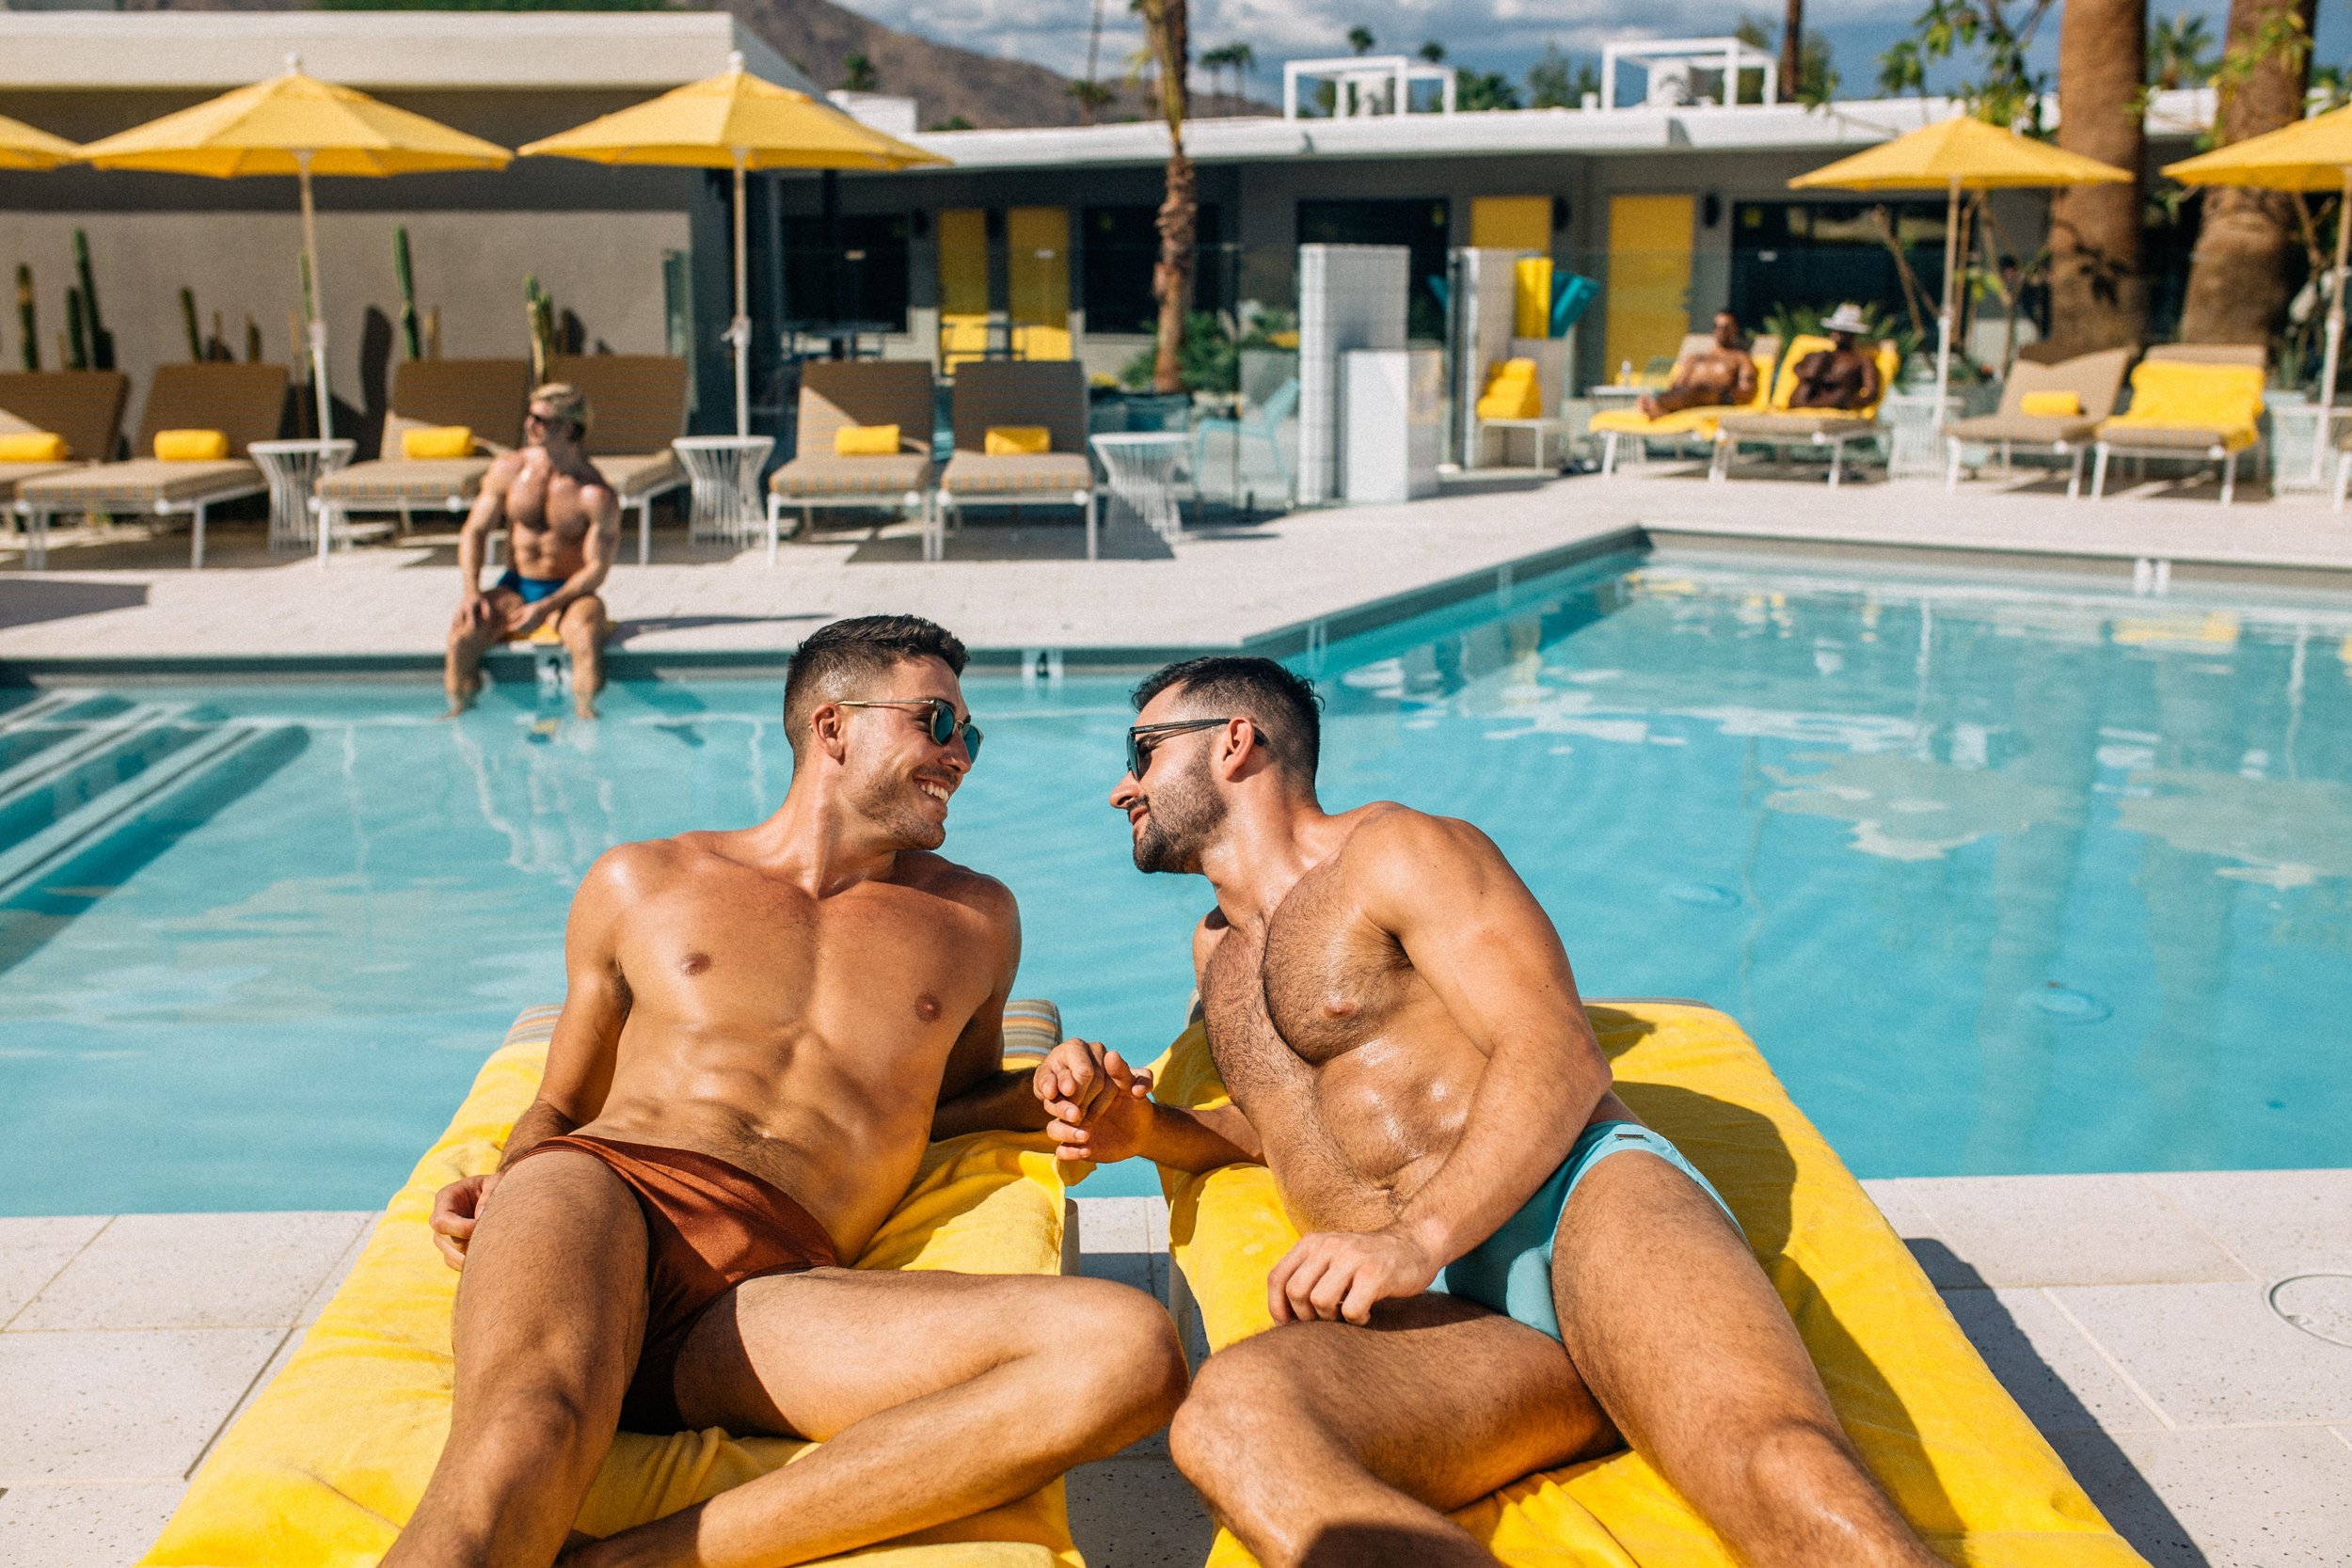 Caliente Nudist Resort - Blog â€” The Palm Springs Guys